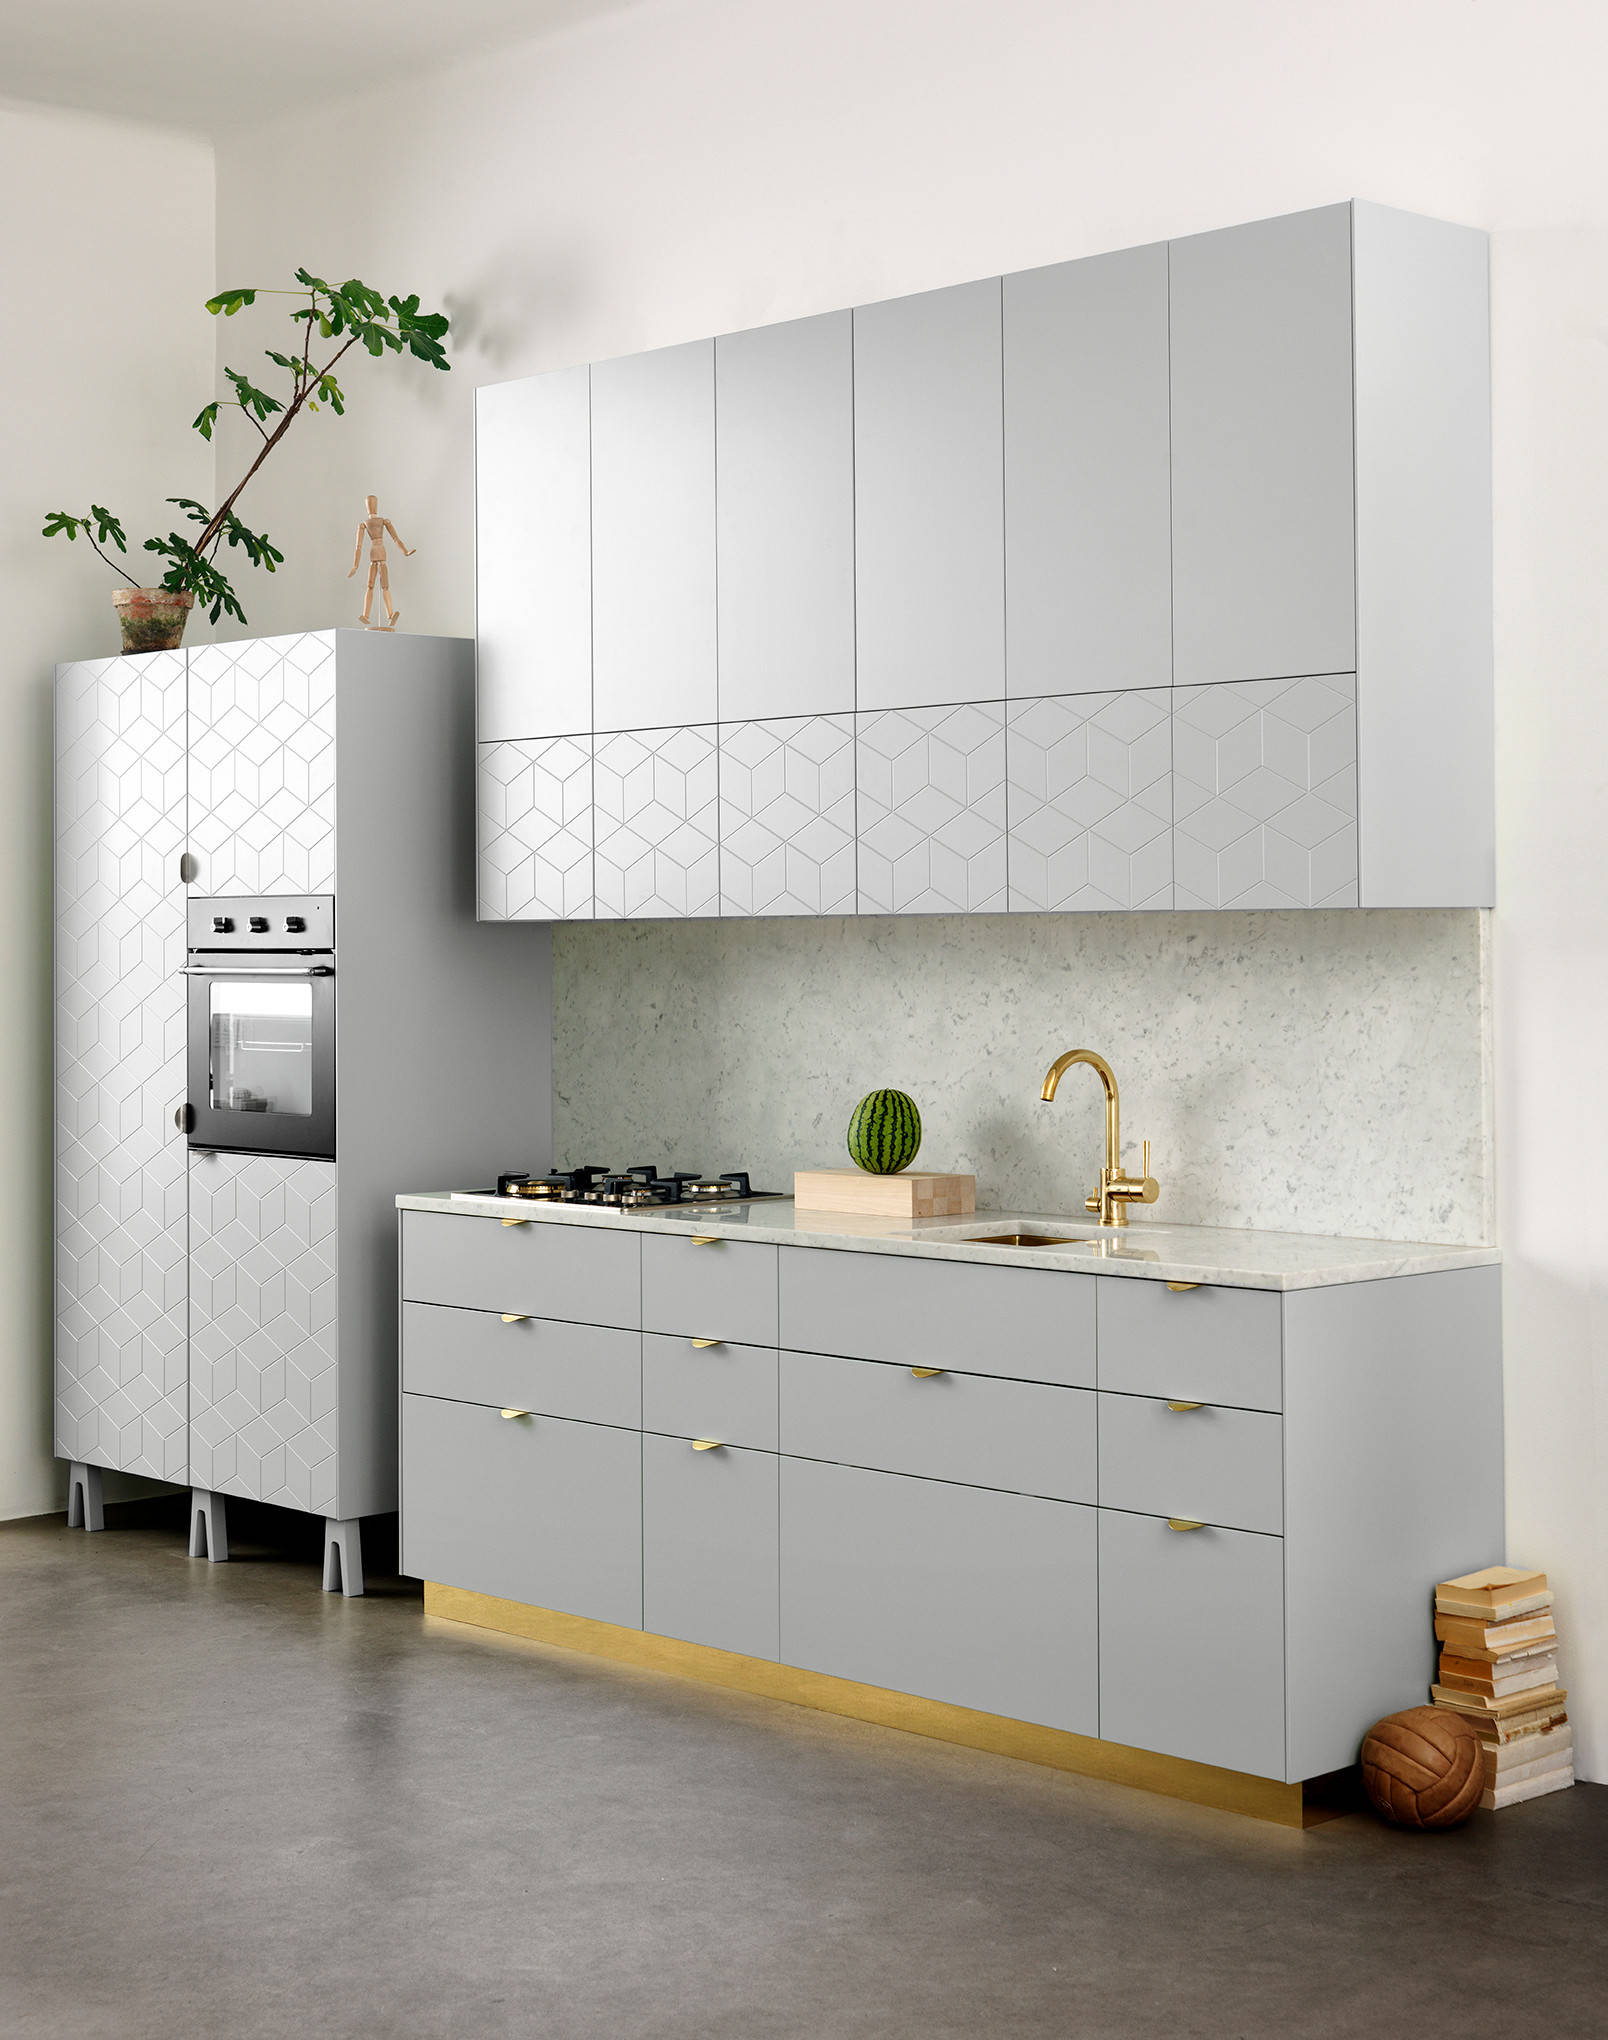 Reform и Ikea: скандинавский дизайн для кухни